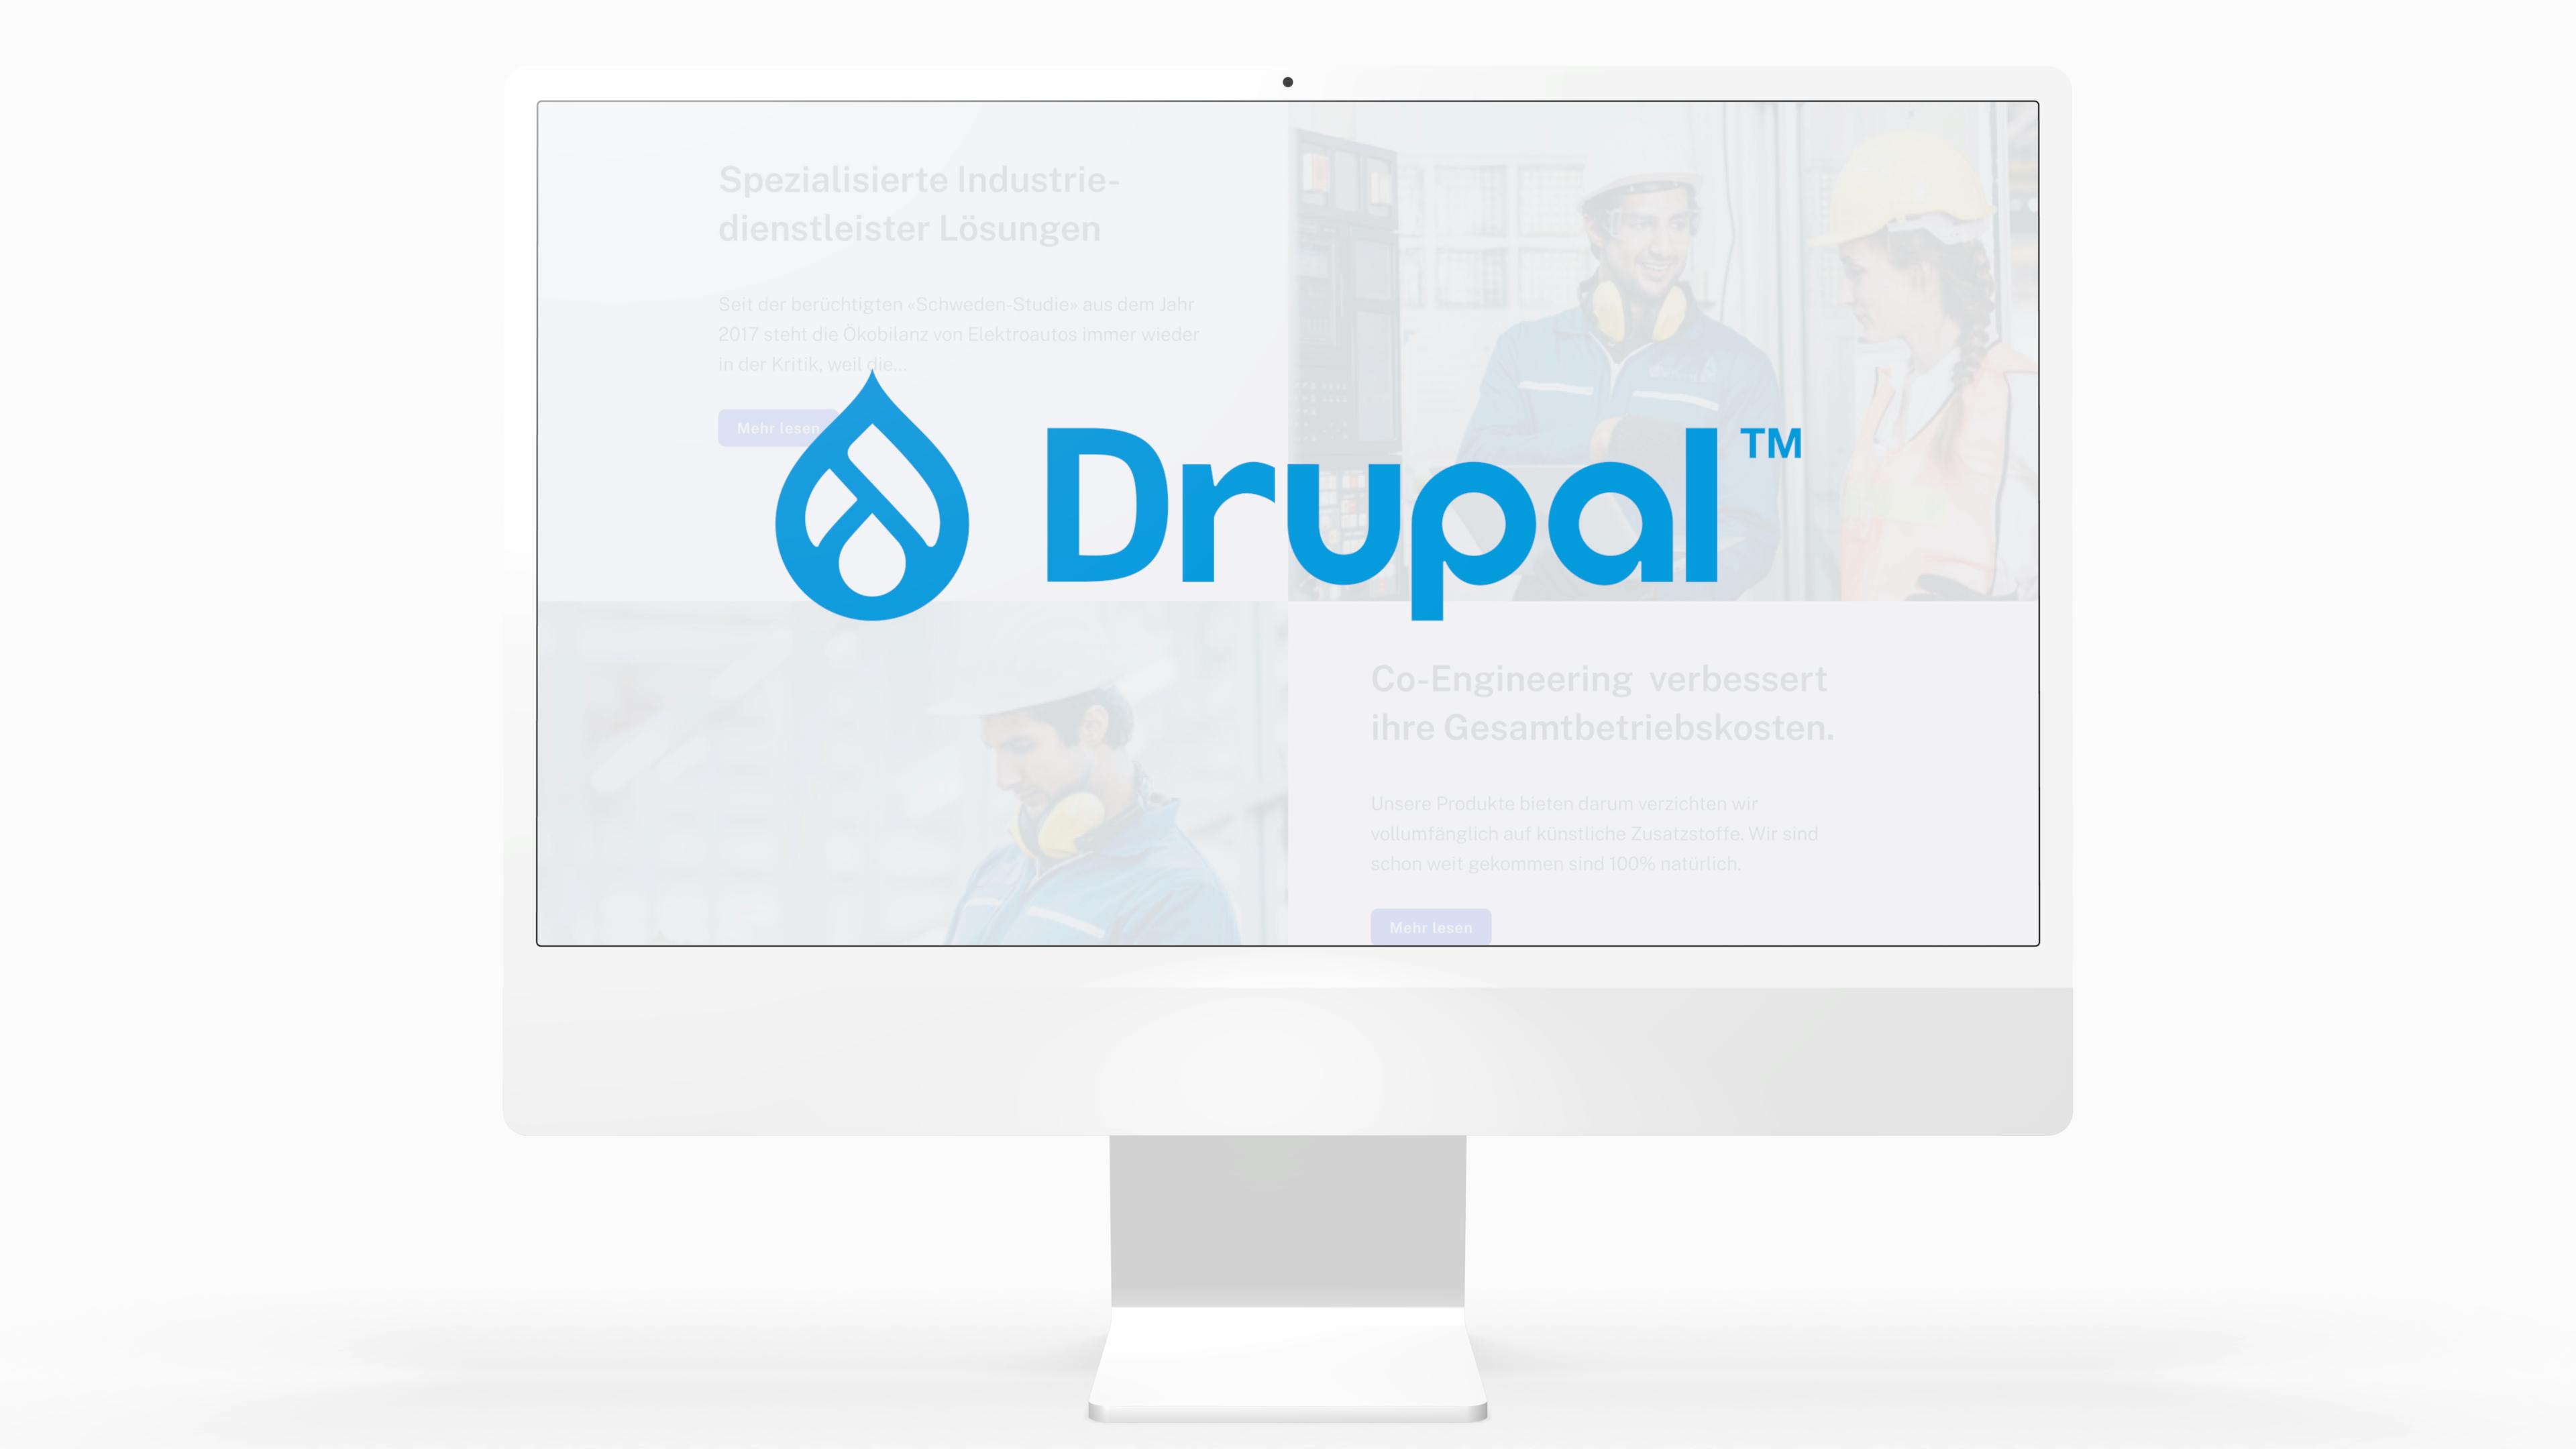 AOS Visualisierung mit Drupal Logo